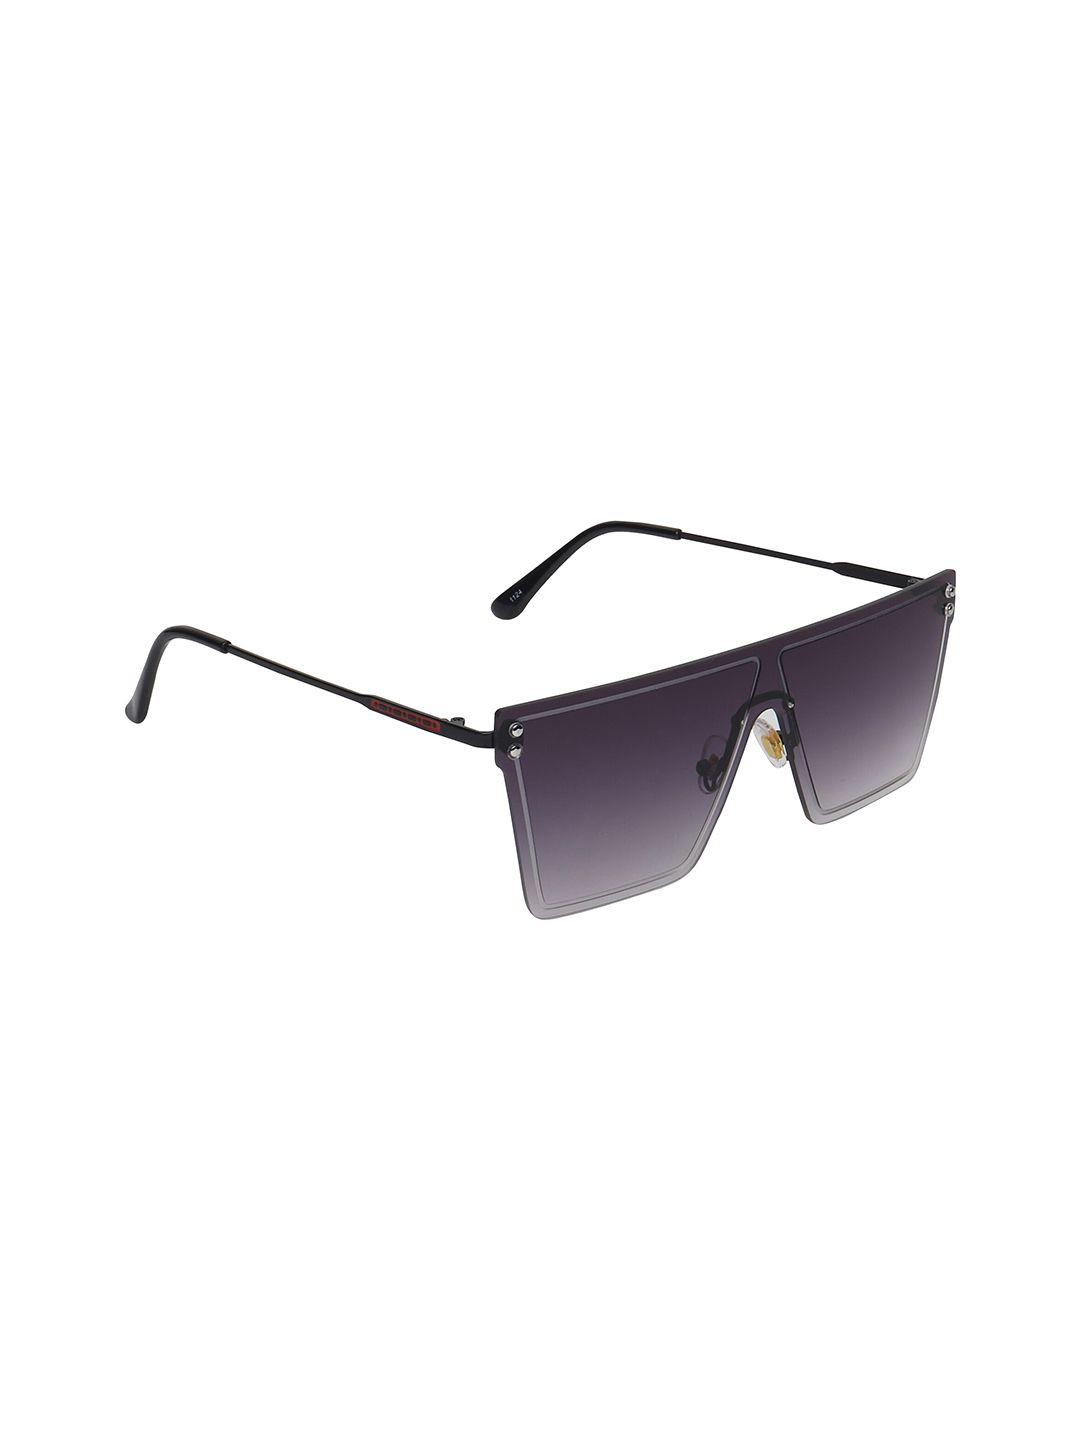 swiss design rimless shield sunglasses with uv protected lens- sdsg-1124-01